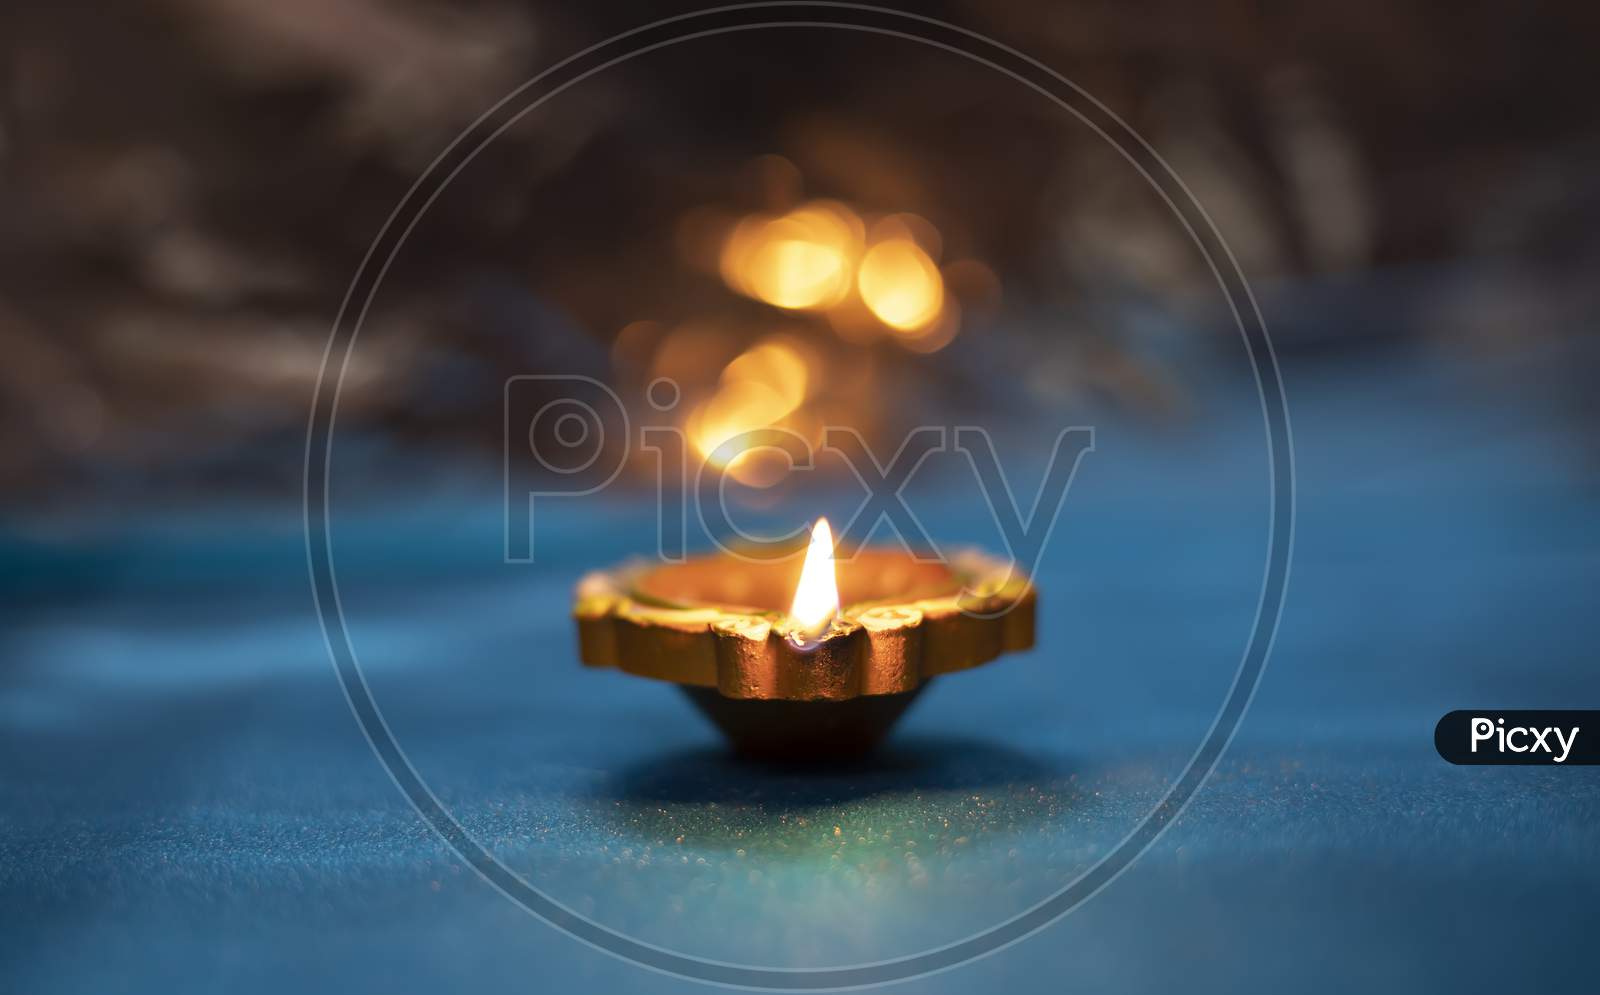 Colorful Clay Diya Lamps Lit During Diwali Celebration, Selective Focus